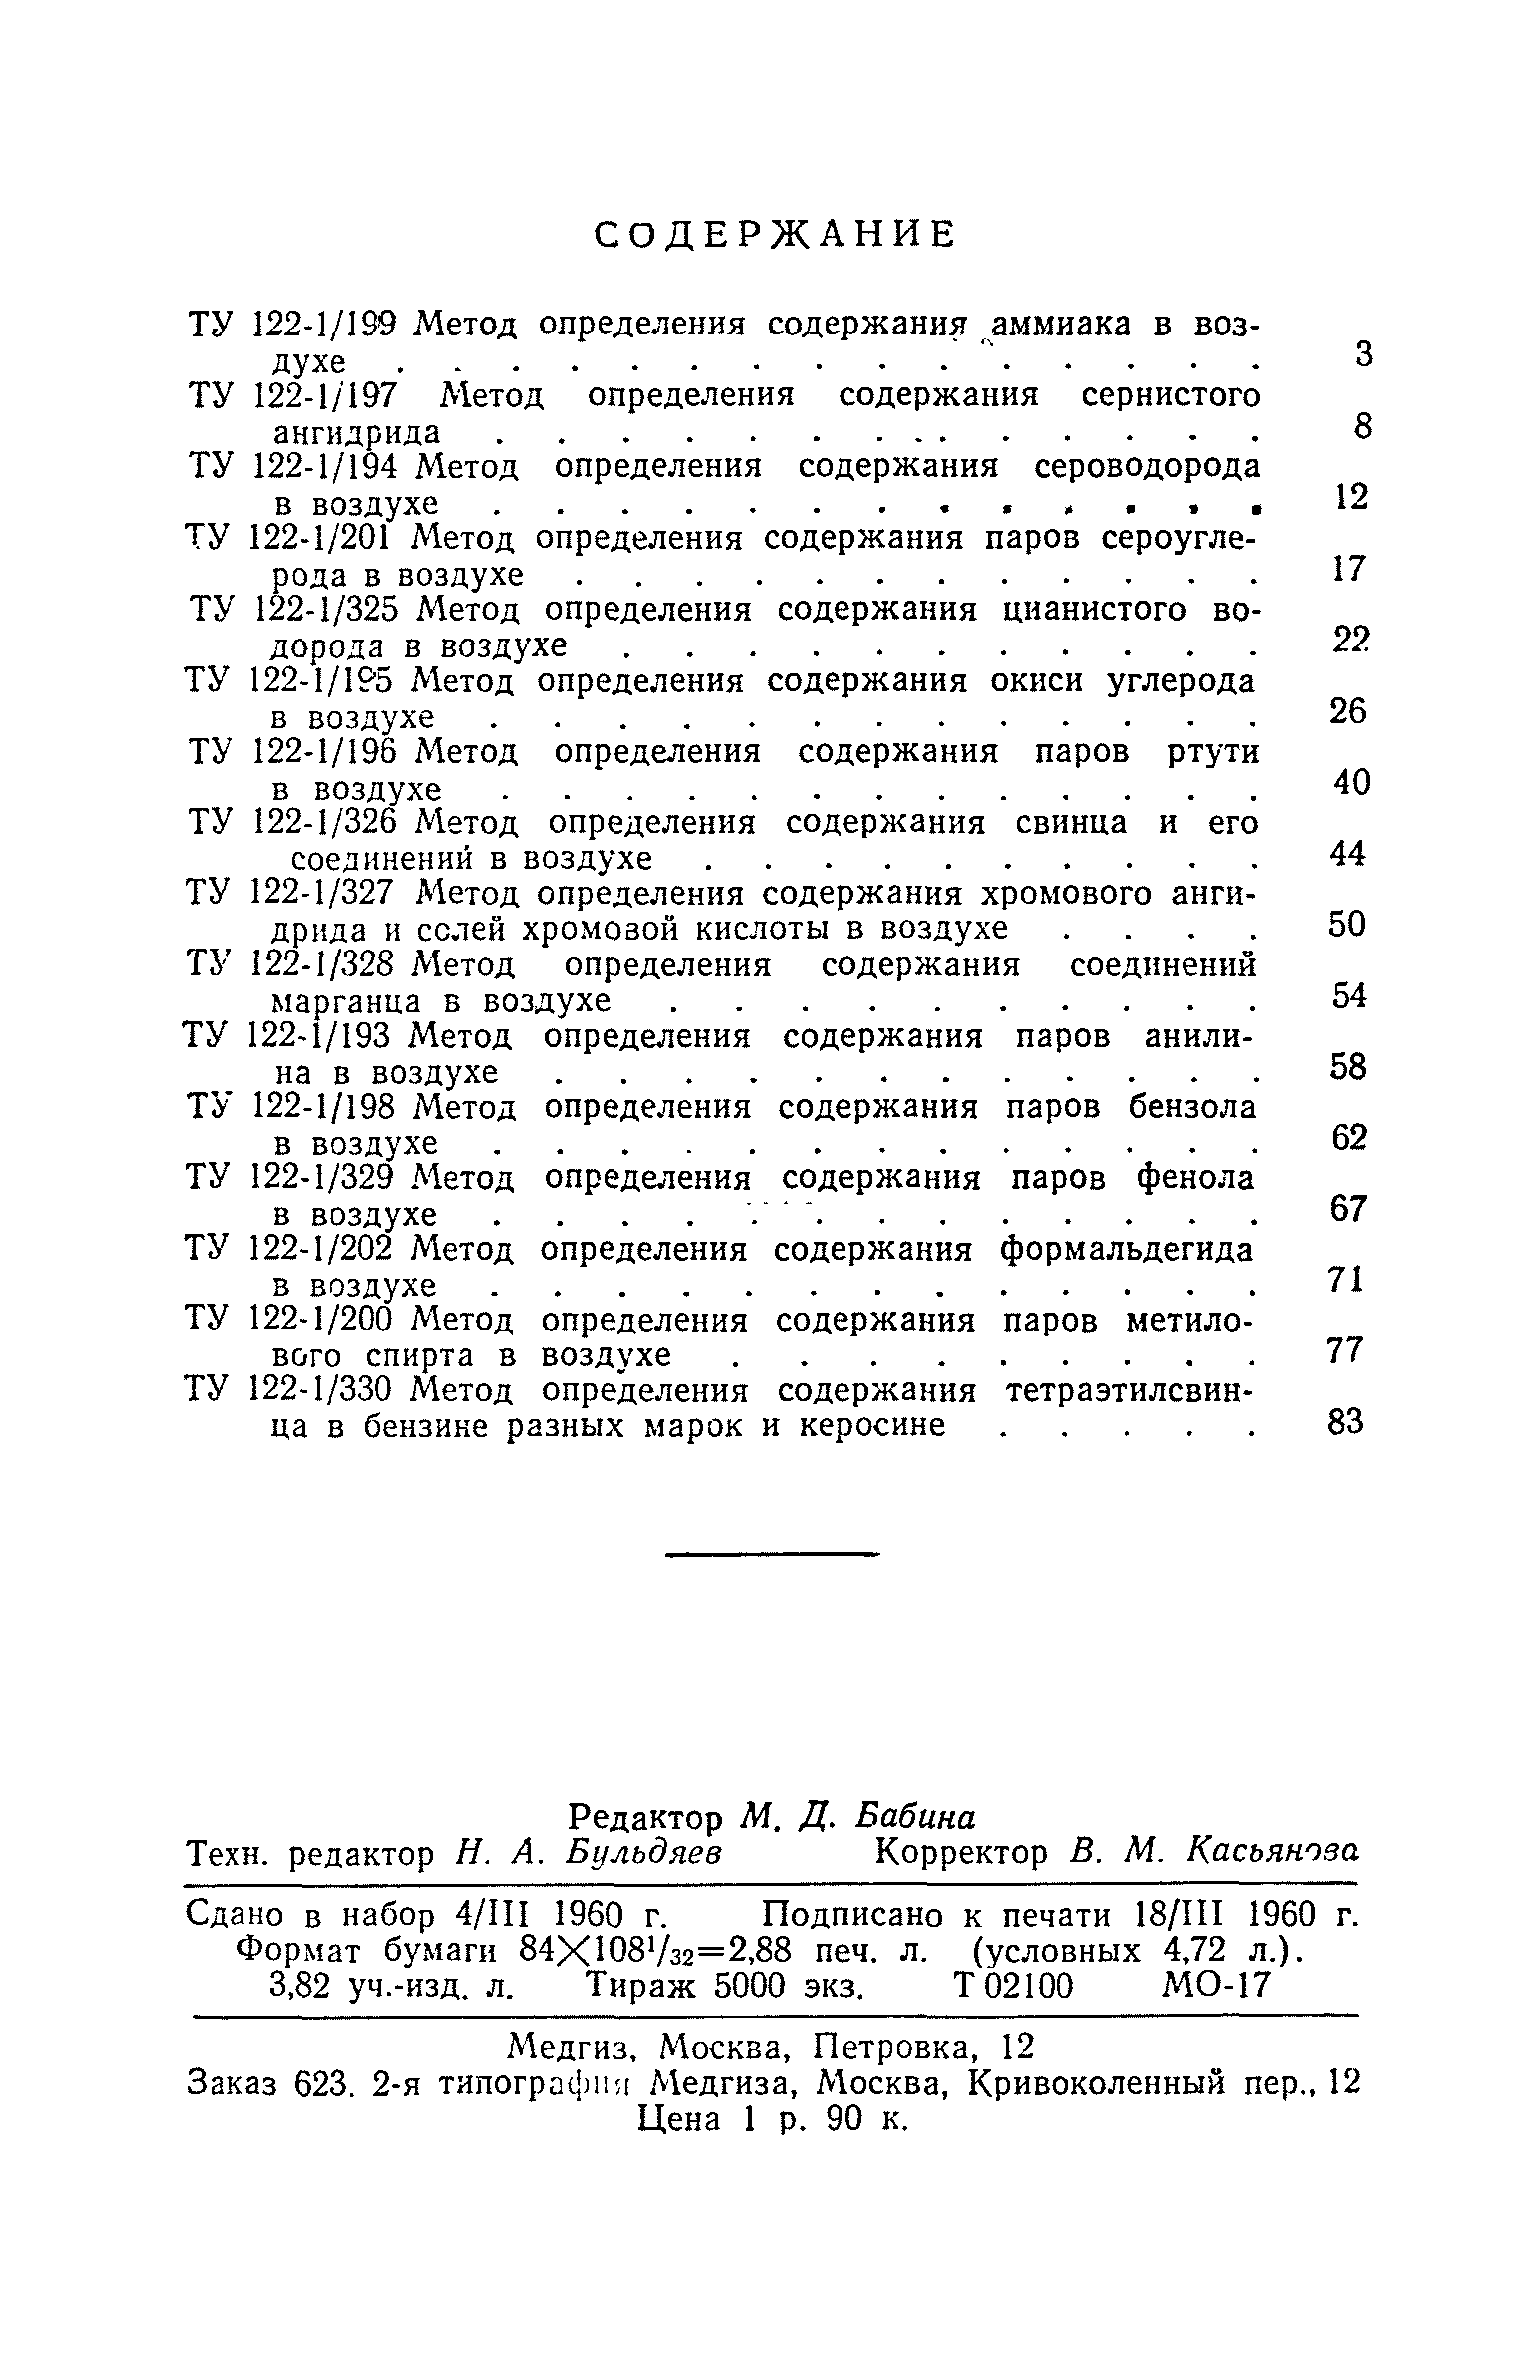 ТУ 122-1/196